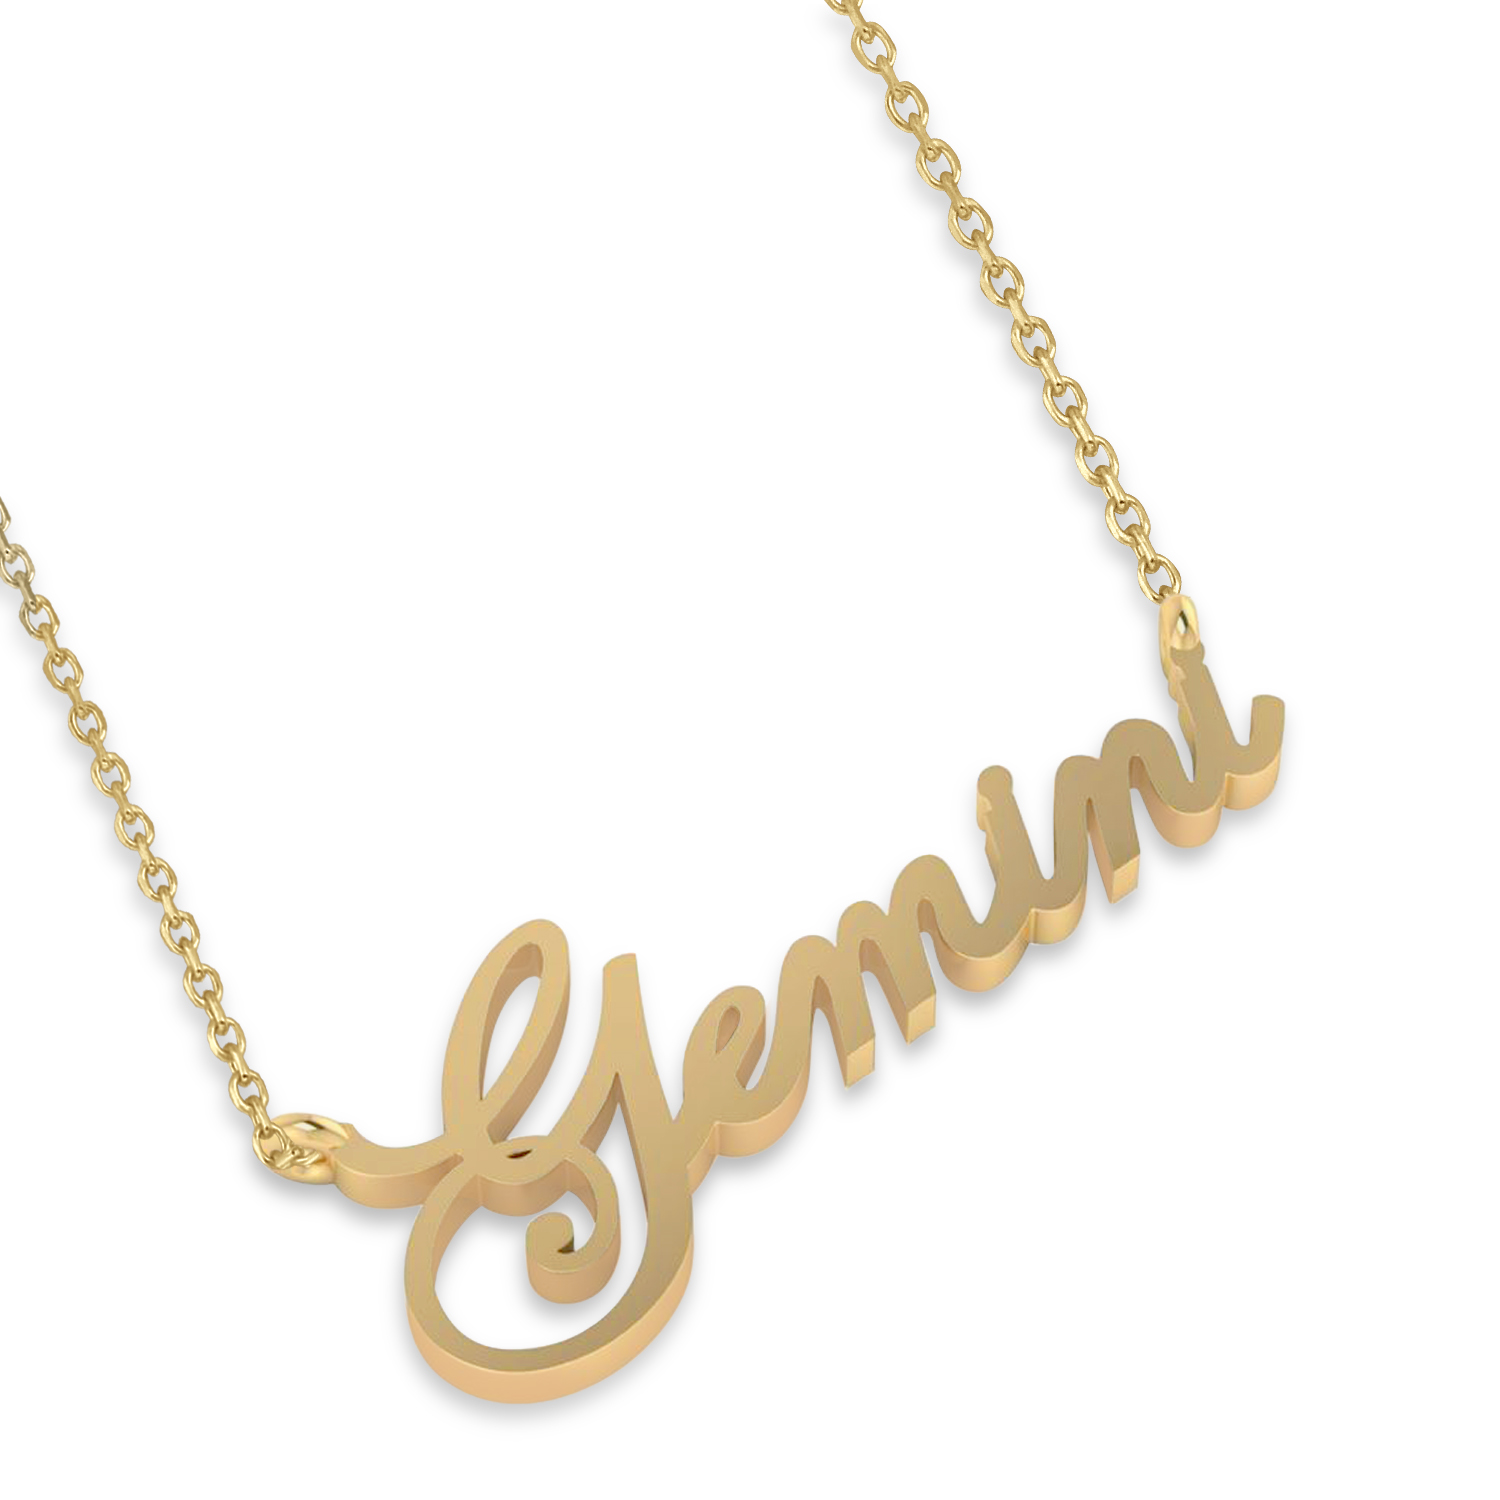 Gemini Zodiac Text Pendant Necklace 14k Yellow Gold